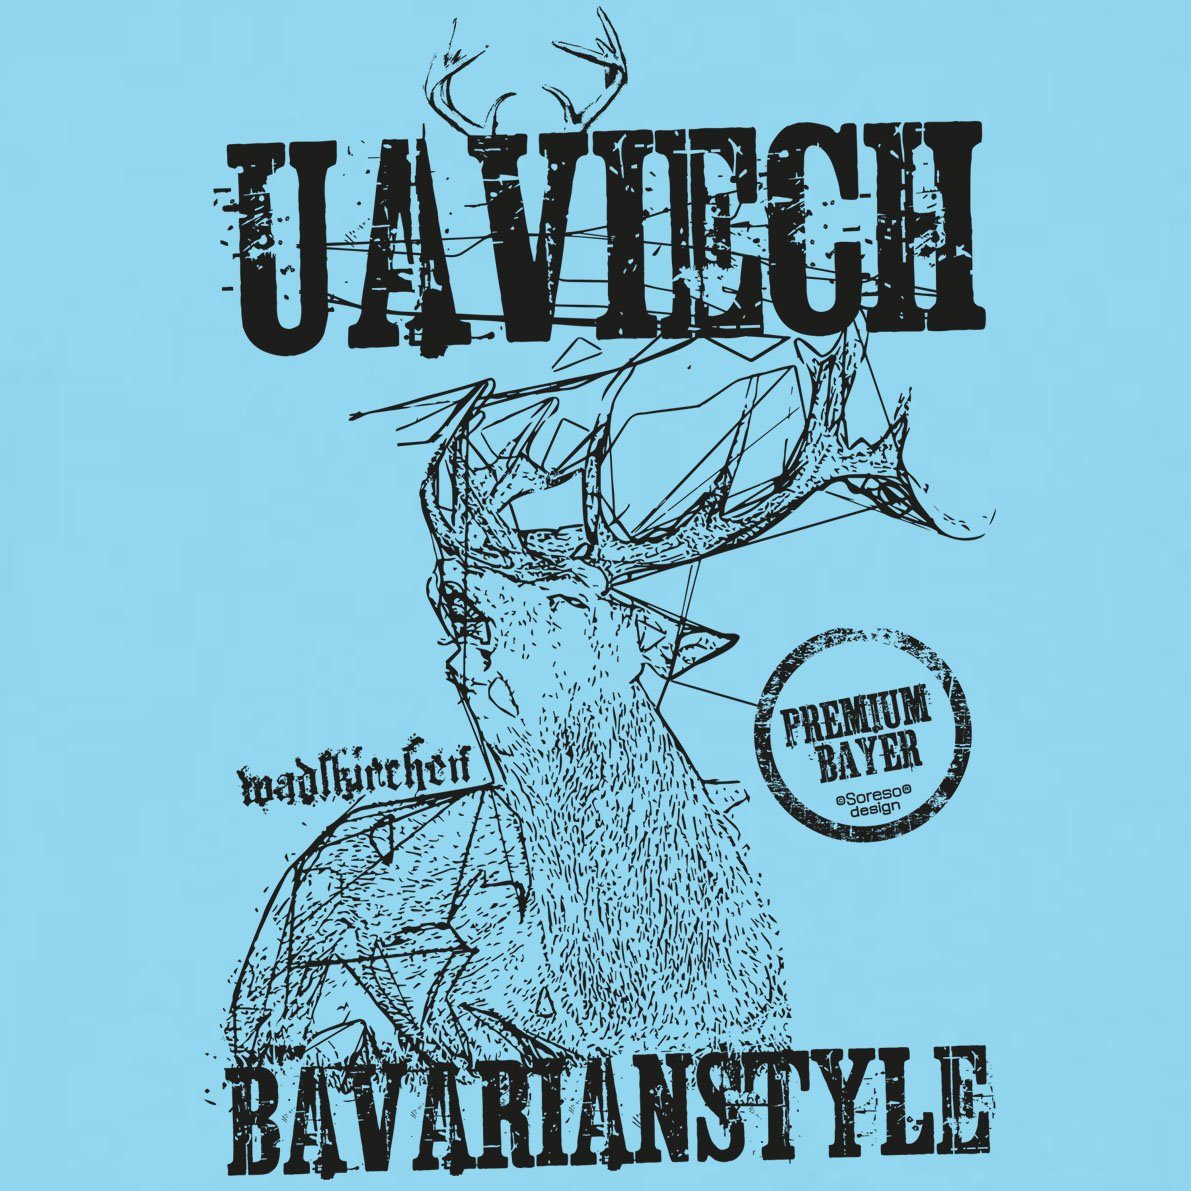 Herren T-Shirt) Uaviech hellblau Soreso® T-Shirt Trachten Trachtenshirt (Ein T-Shirt